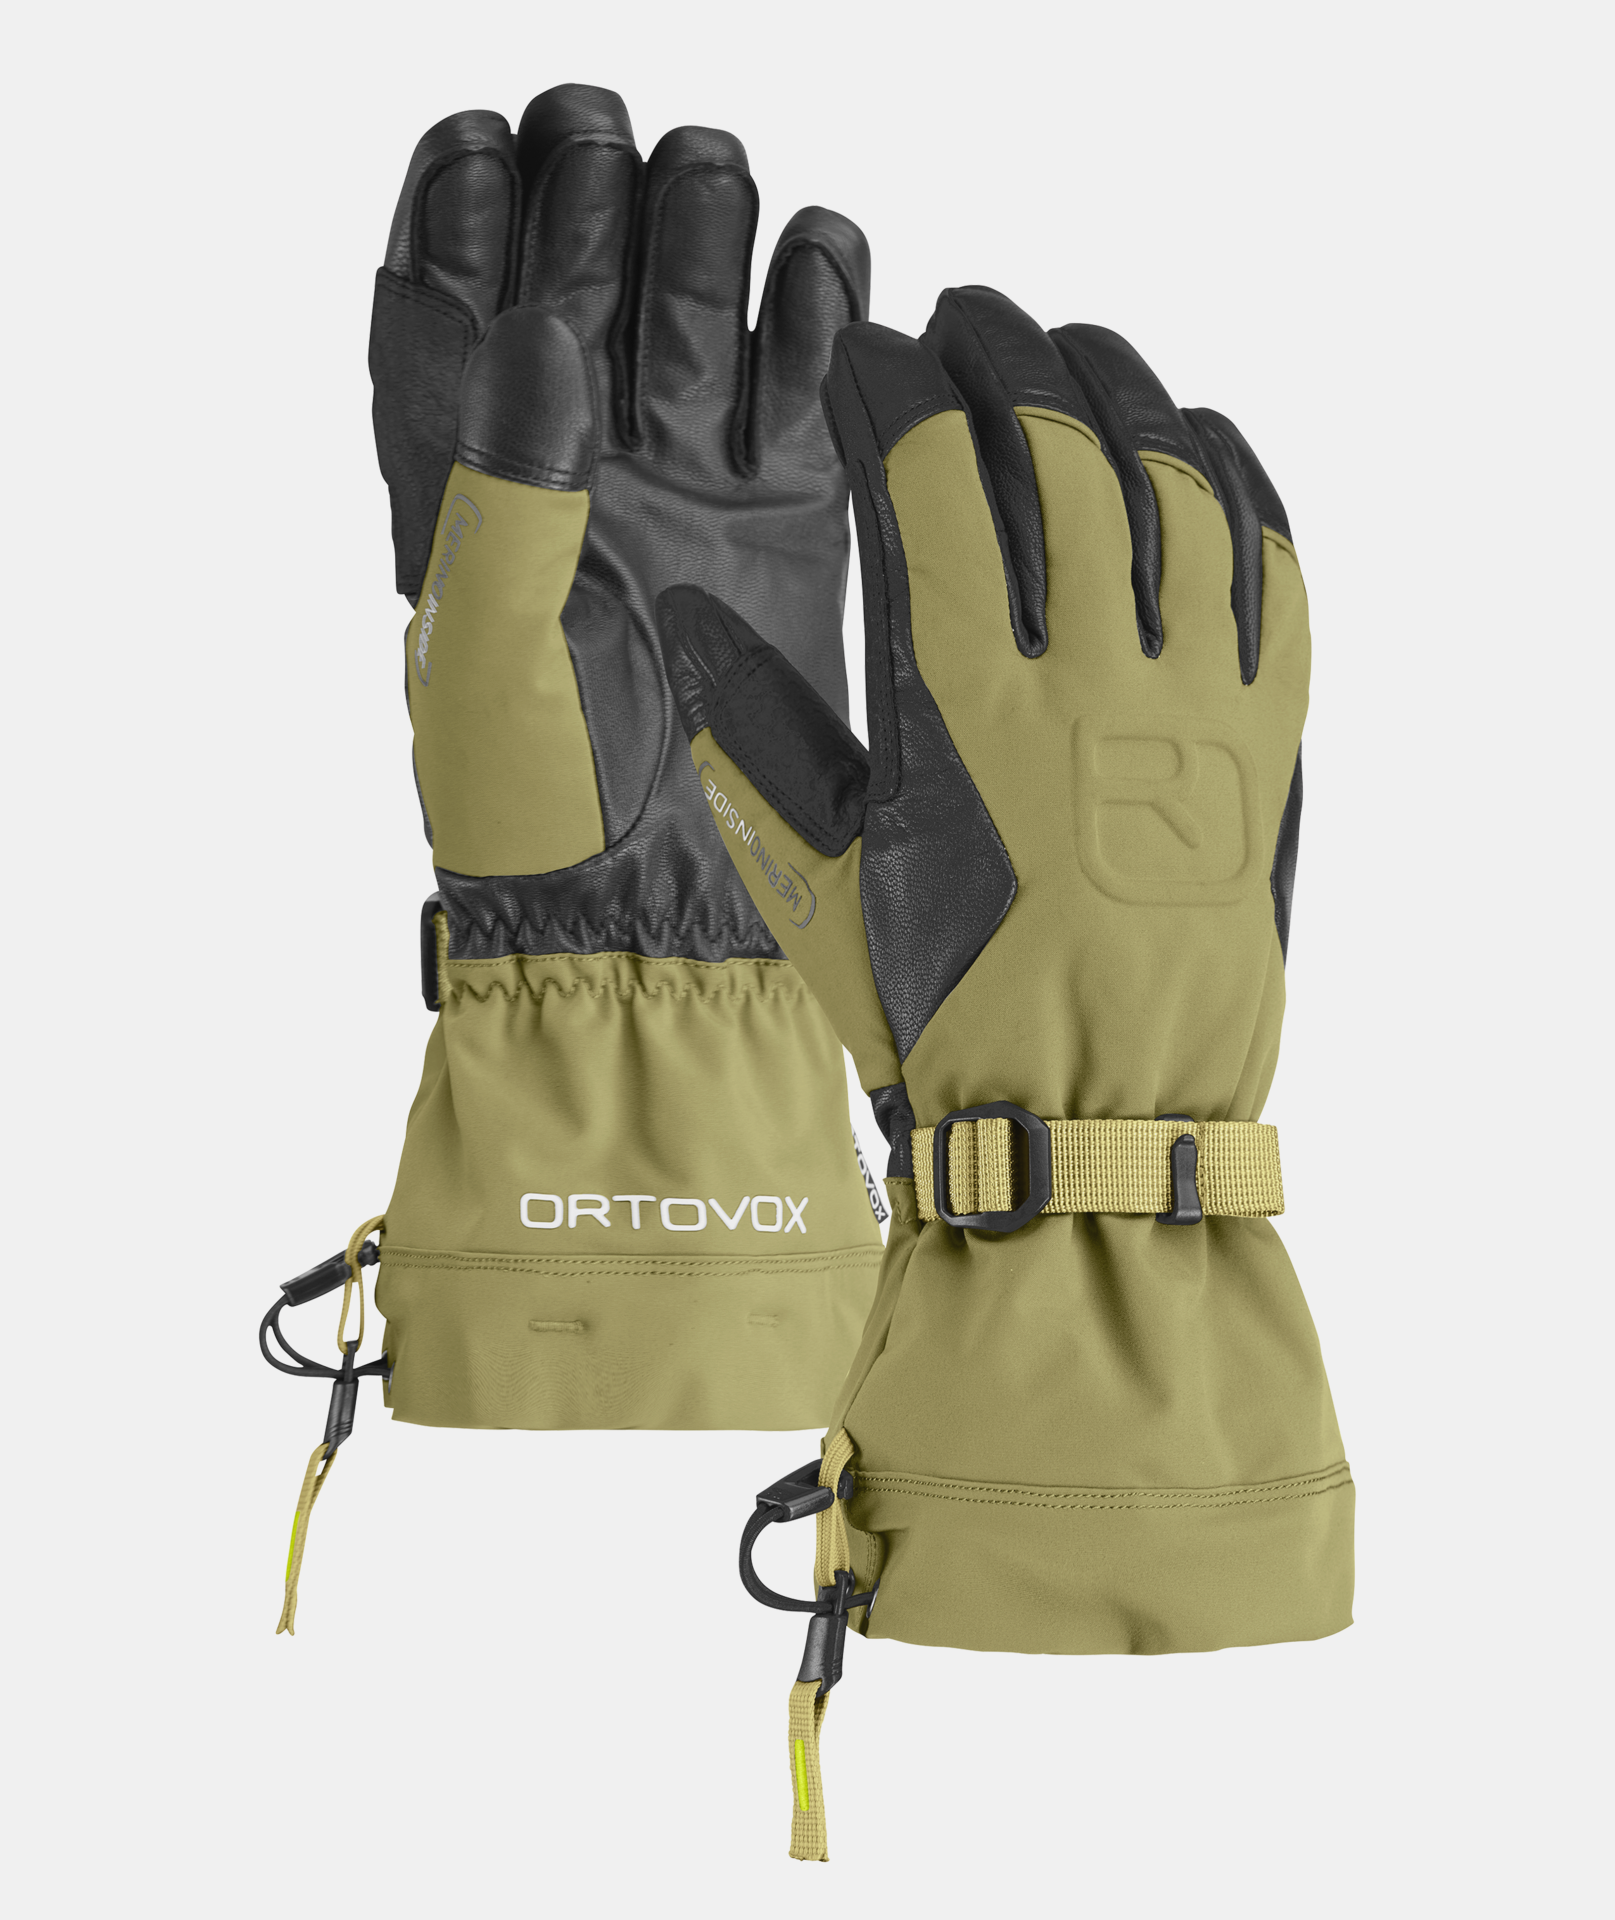 ORTOVOX MERINO FREERIDE GLOVE M, Gloves